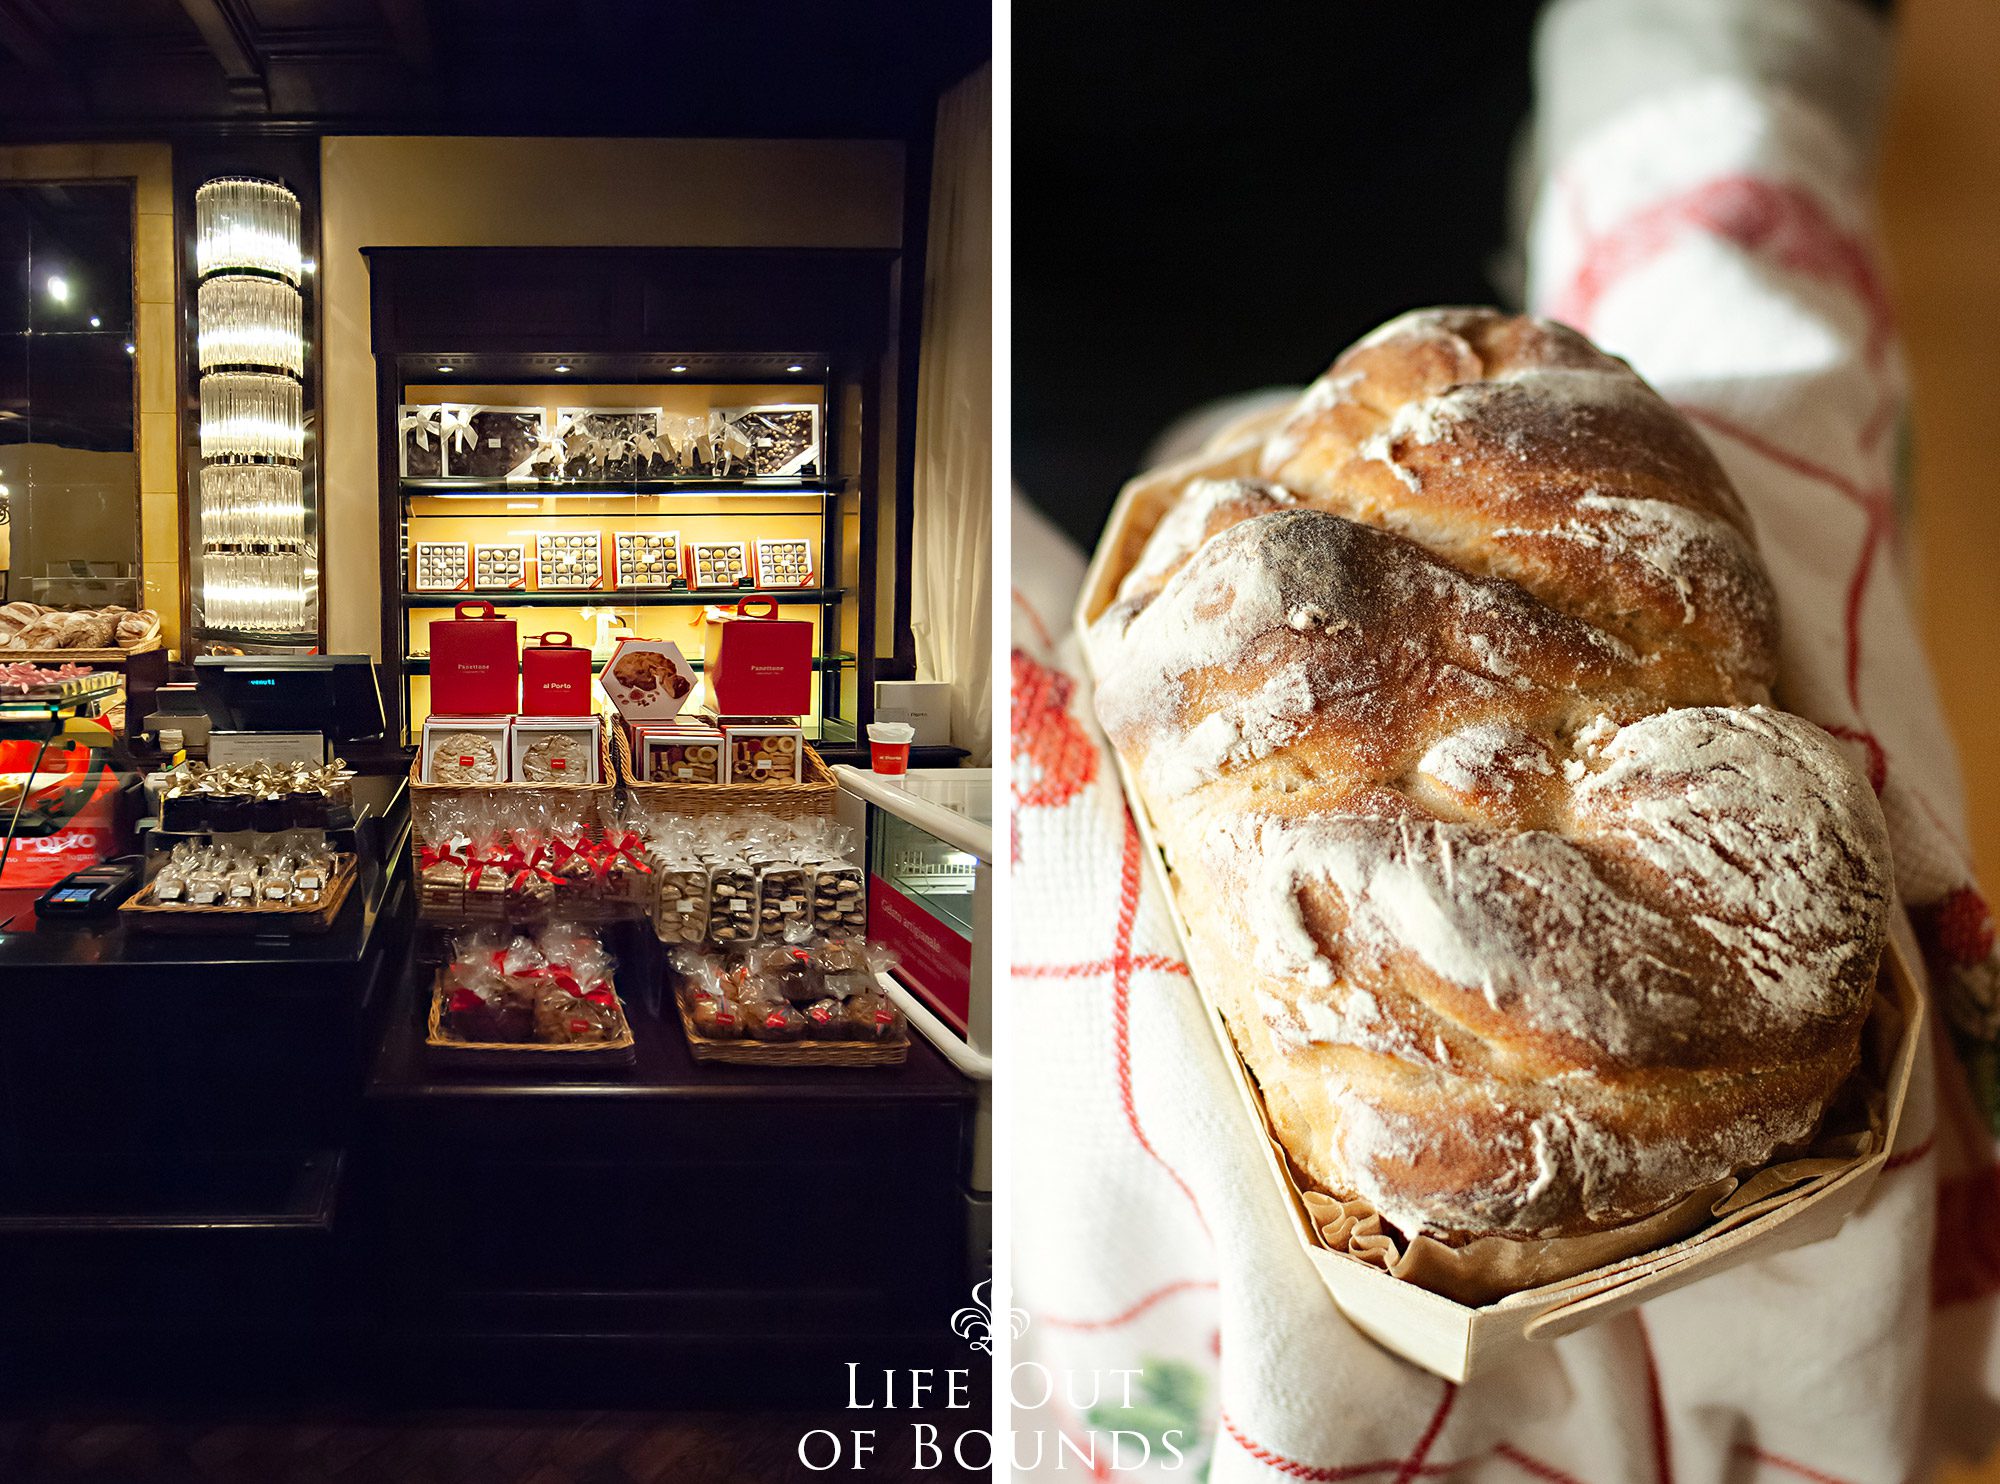 Patisserie-counter-at-Ristorante-Grand-Cafe-al-Porto-in-Lugano-Switzerland-and-their-spelt-bread-loaf